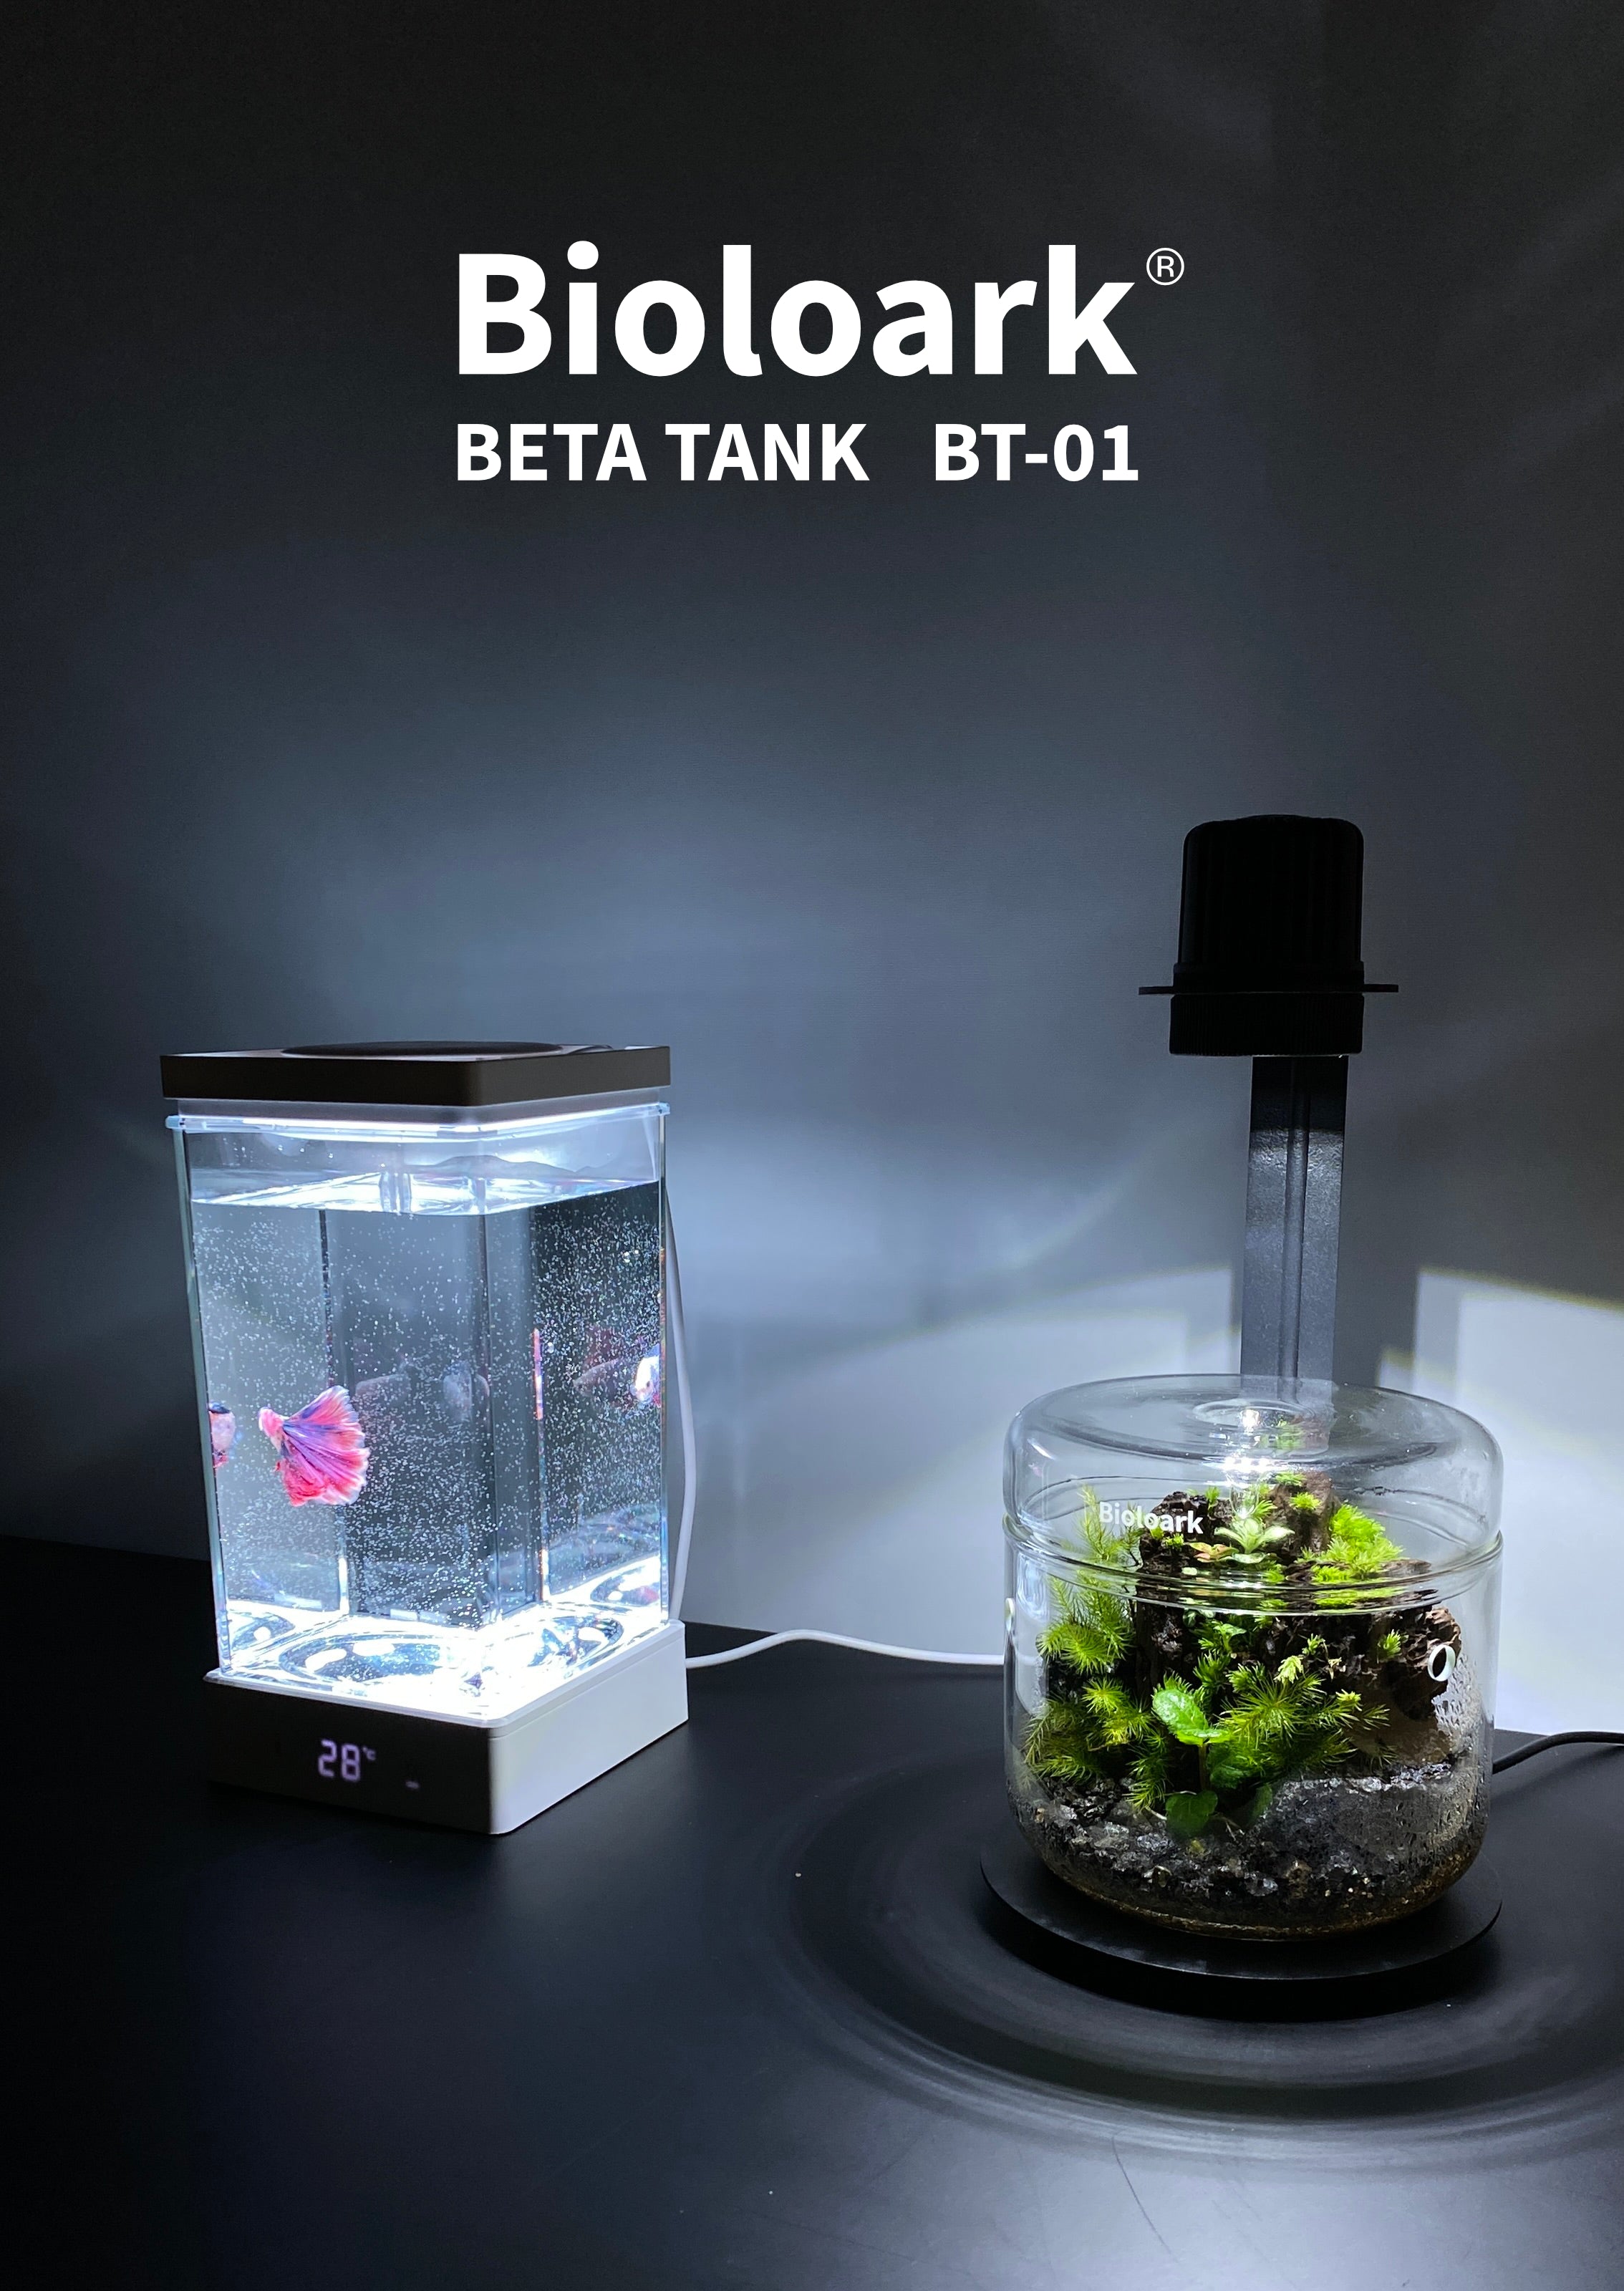 BETA TANK ベタ専用照明ヒーター付き水槽 BT-01 – Bioloark Japan